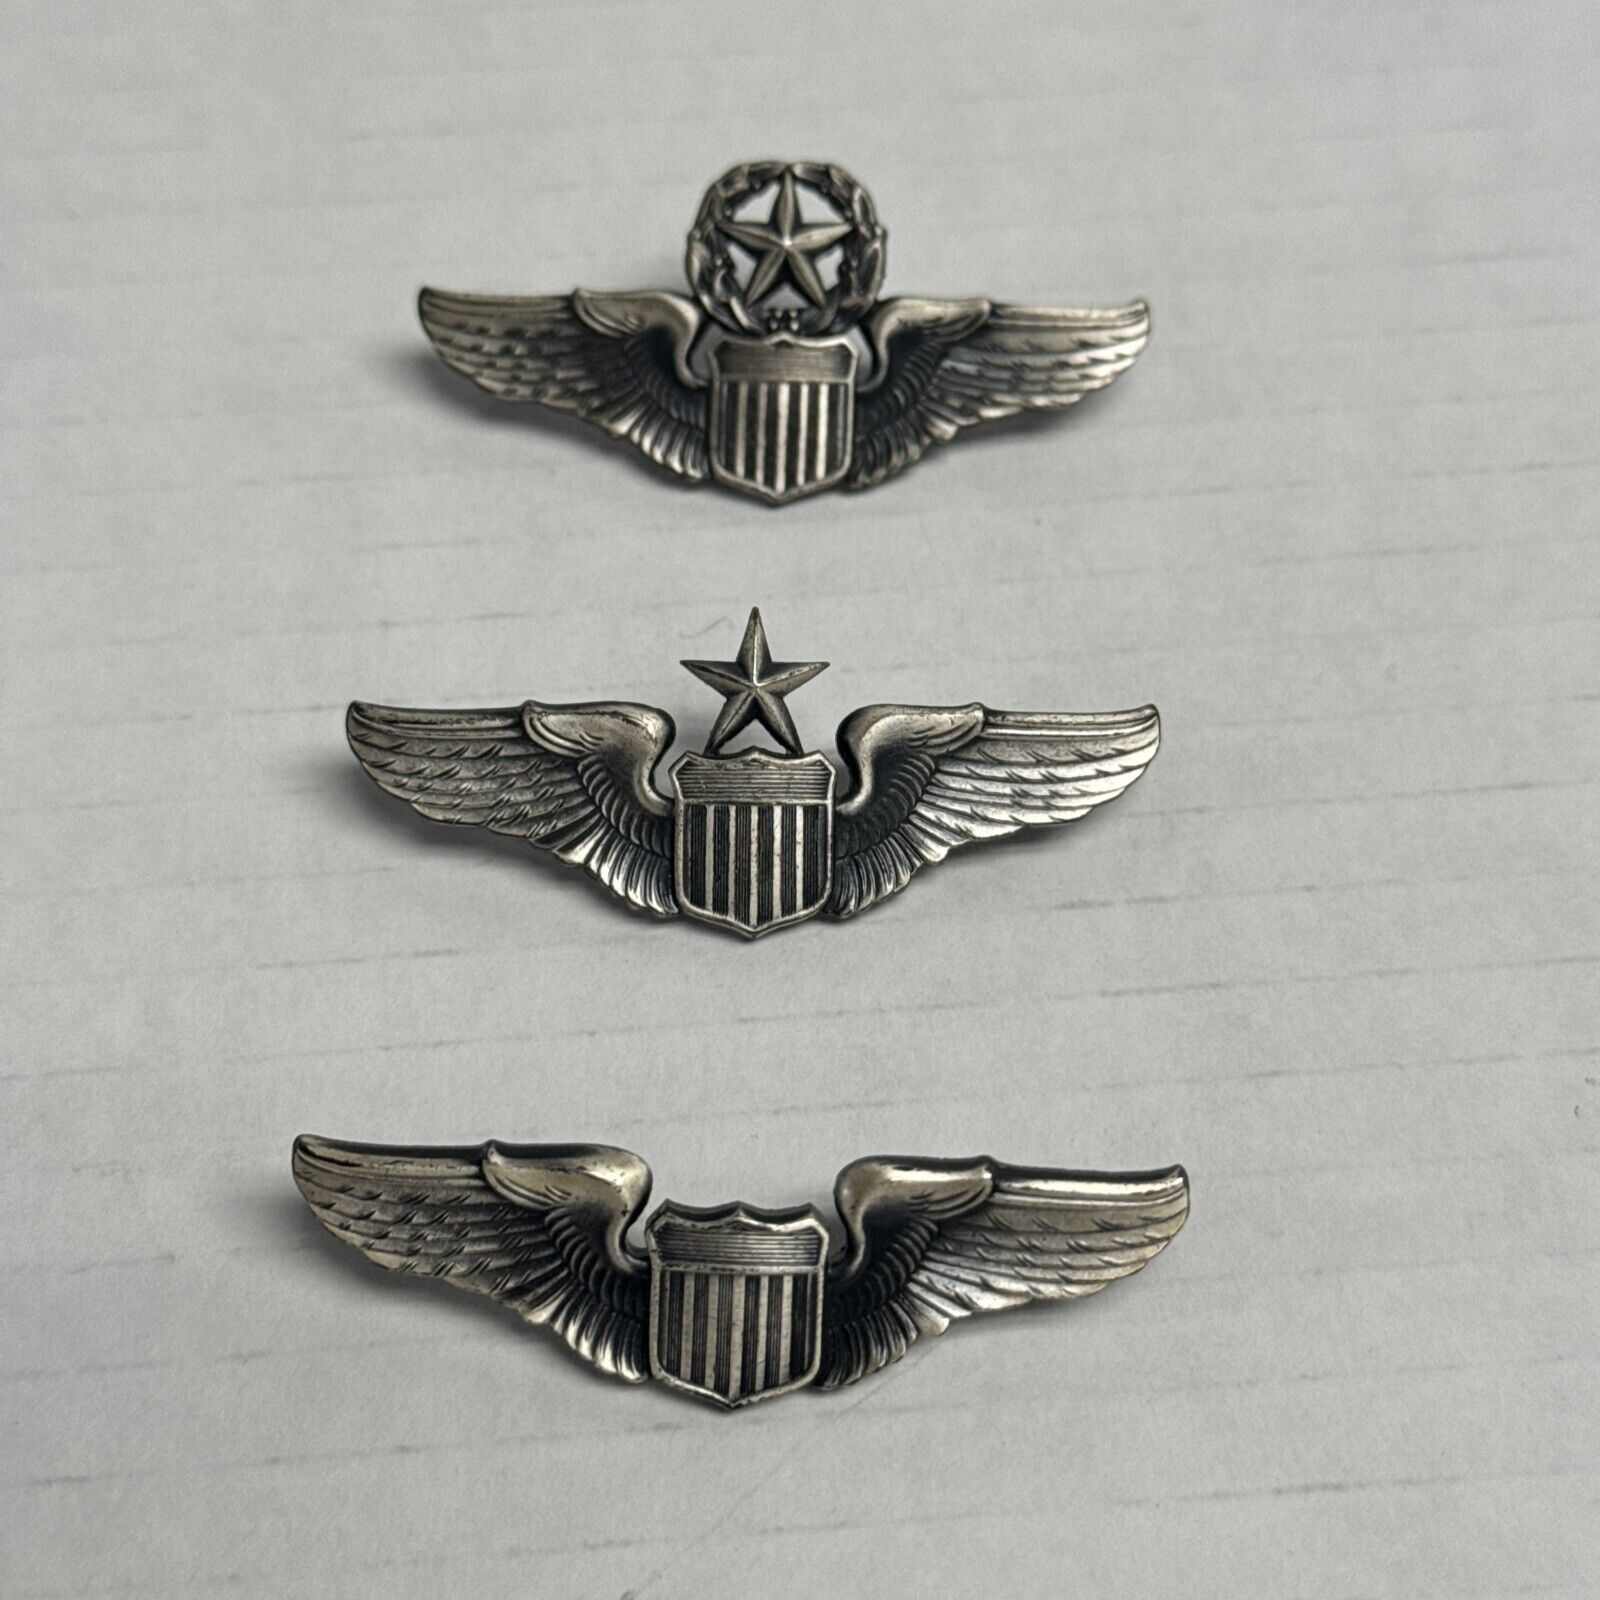 USAF Army Senior Master Aviator Aviation Pilot Wing Badge Pin Military